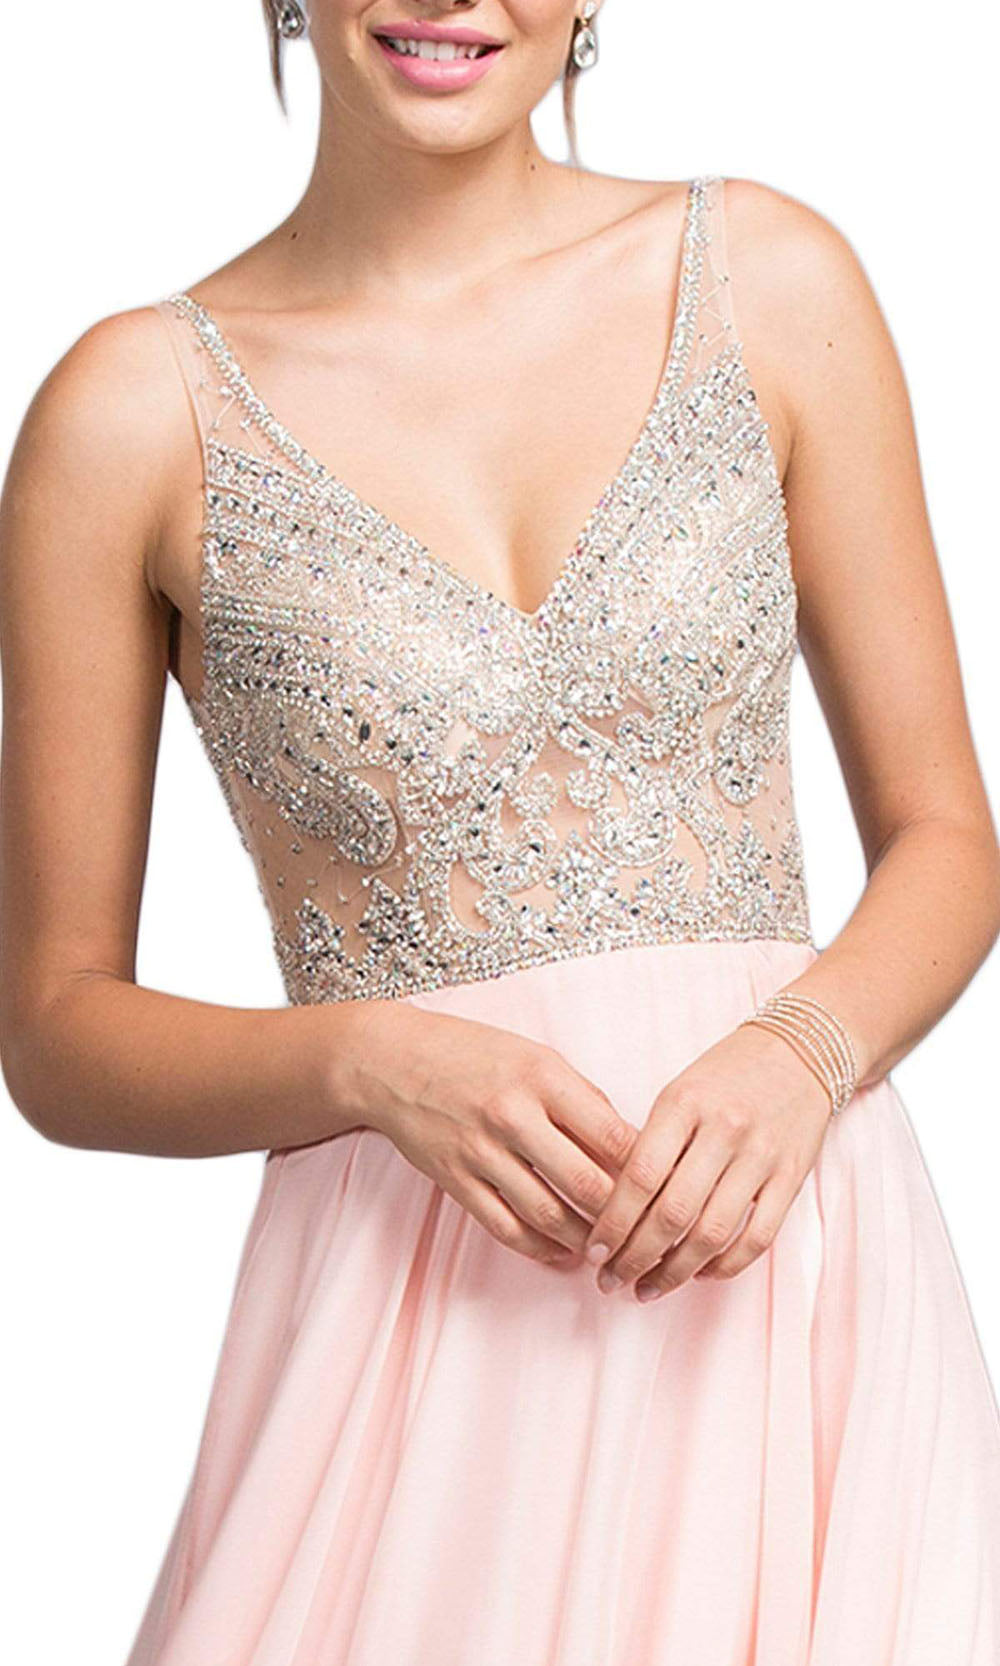 Aspeed Design - Ornate Bodice Chiffon A-Line Gown L2055SC In Pink